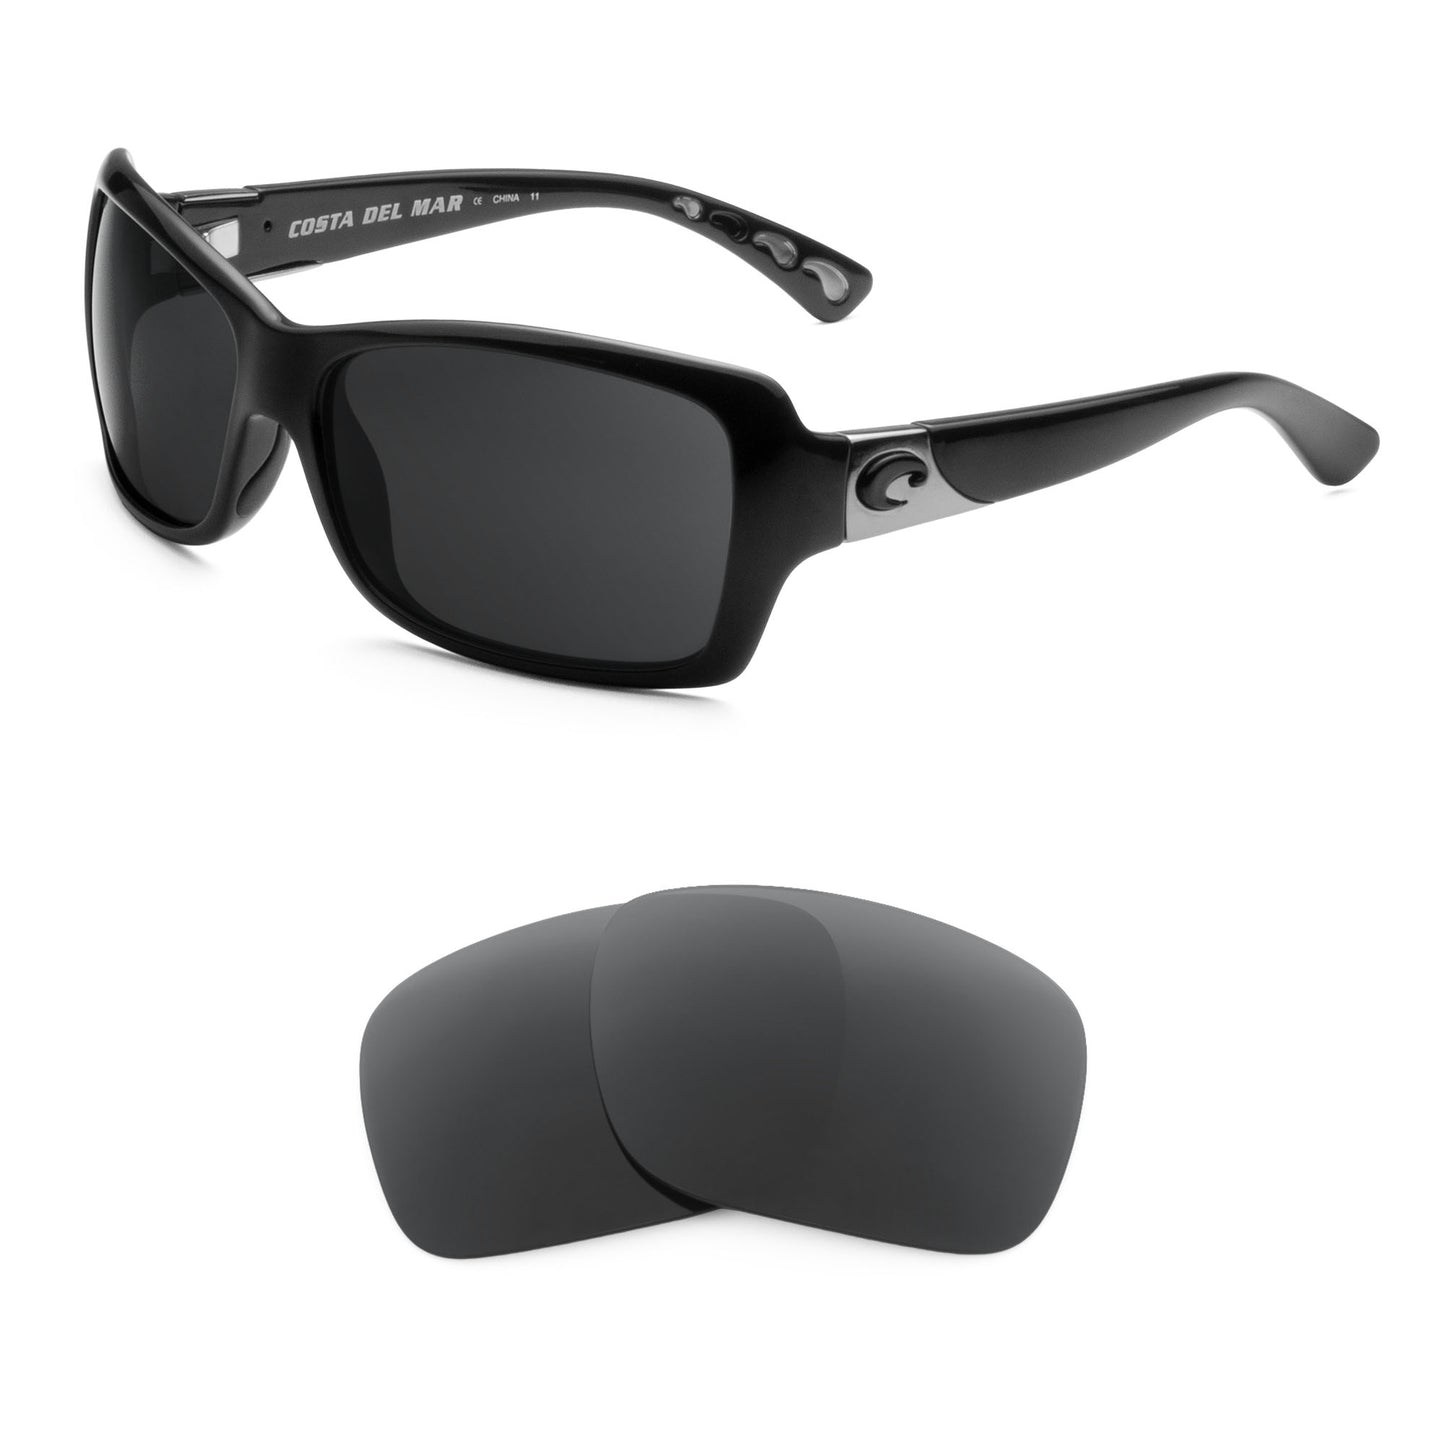 Costa Islamorada sunglasses with replacement lenses